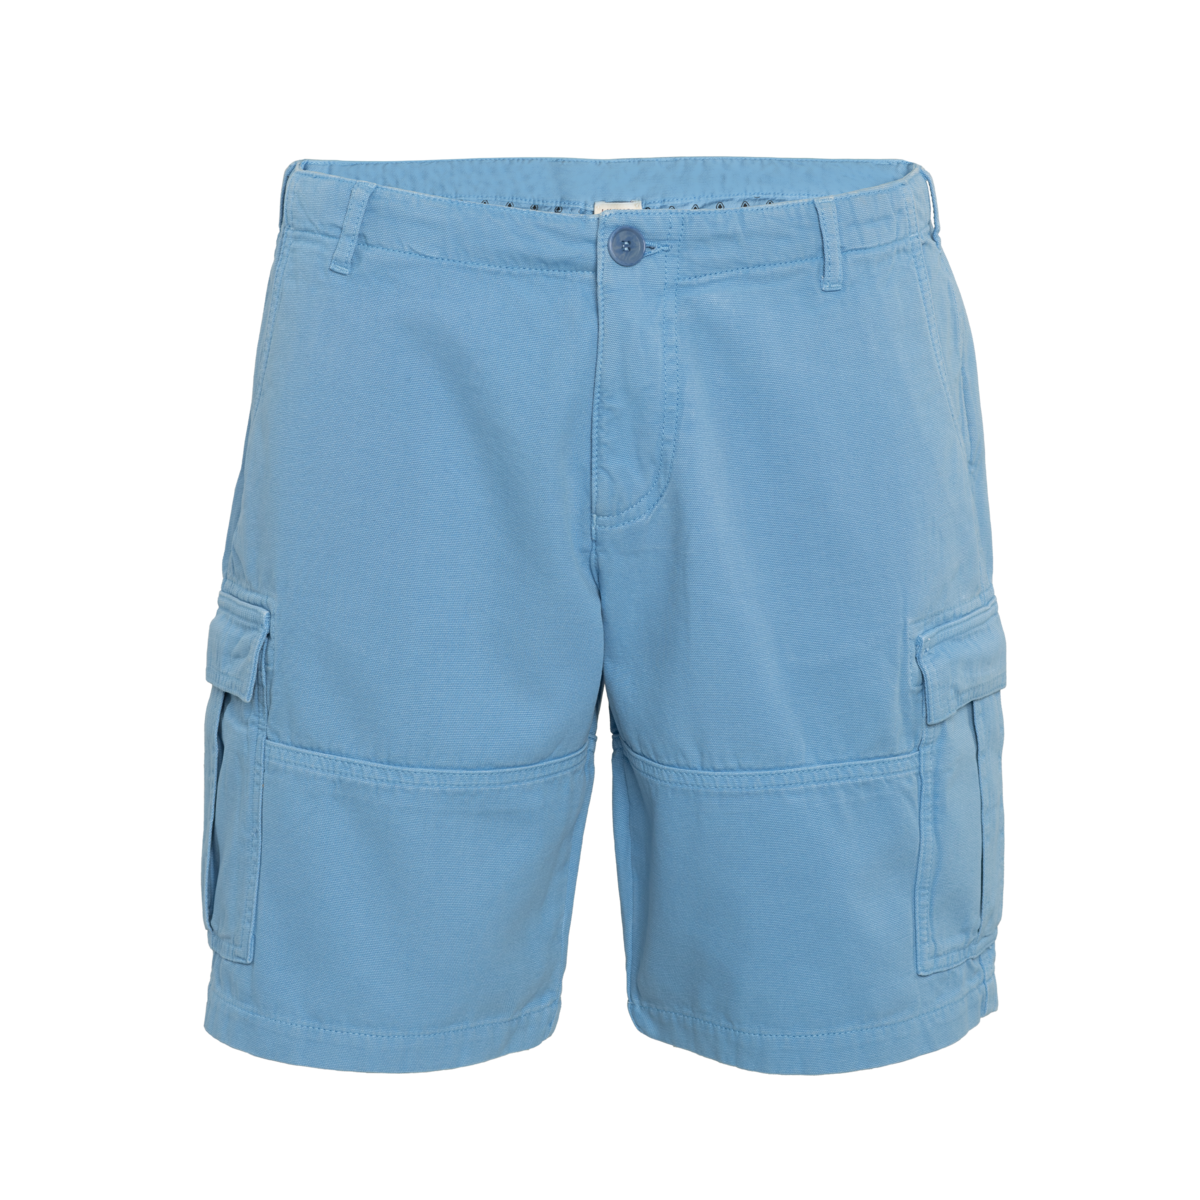 Blue Bermuda shorts, RICO